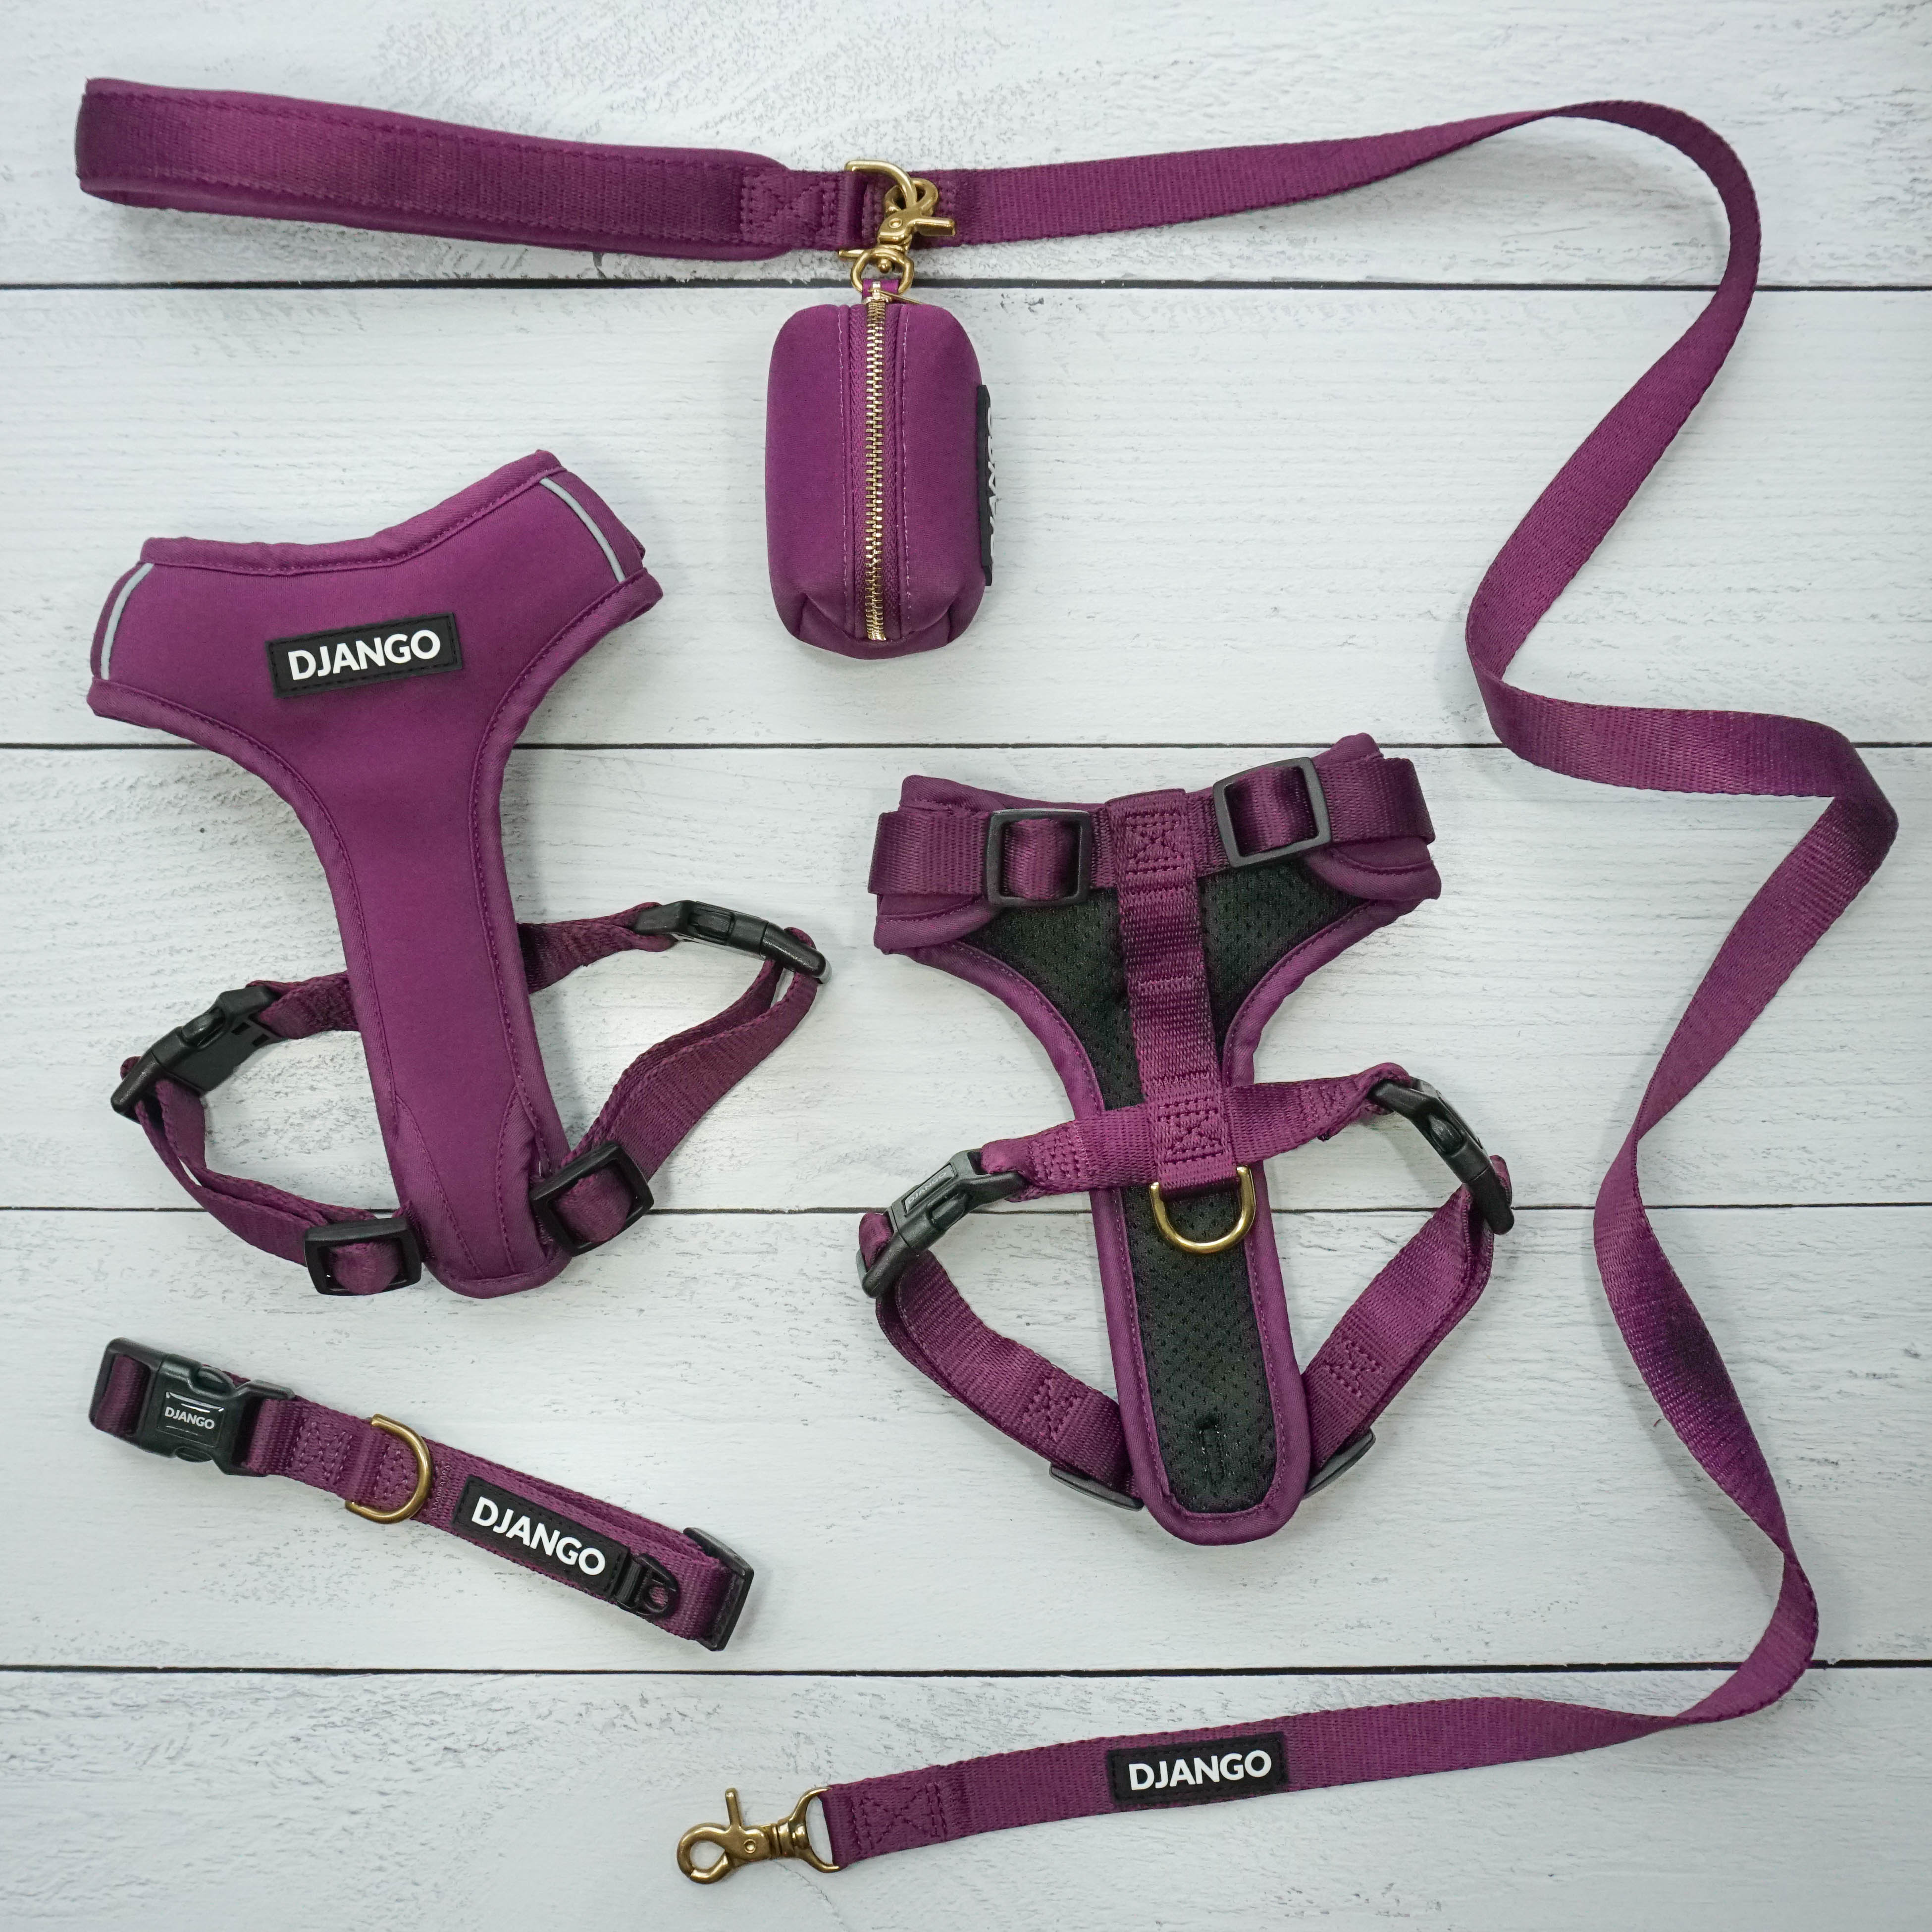 DJANGO Adventure Dog Harness, Adventure Dog Collar, Adventure Dog Leash, and Waste Bag Holder in Plum Purple - djangobrand.com